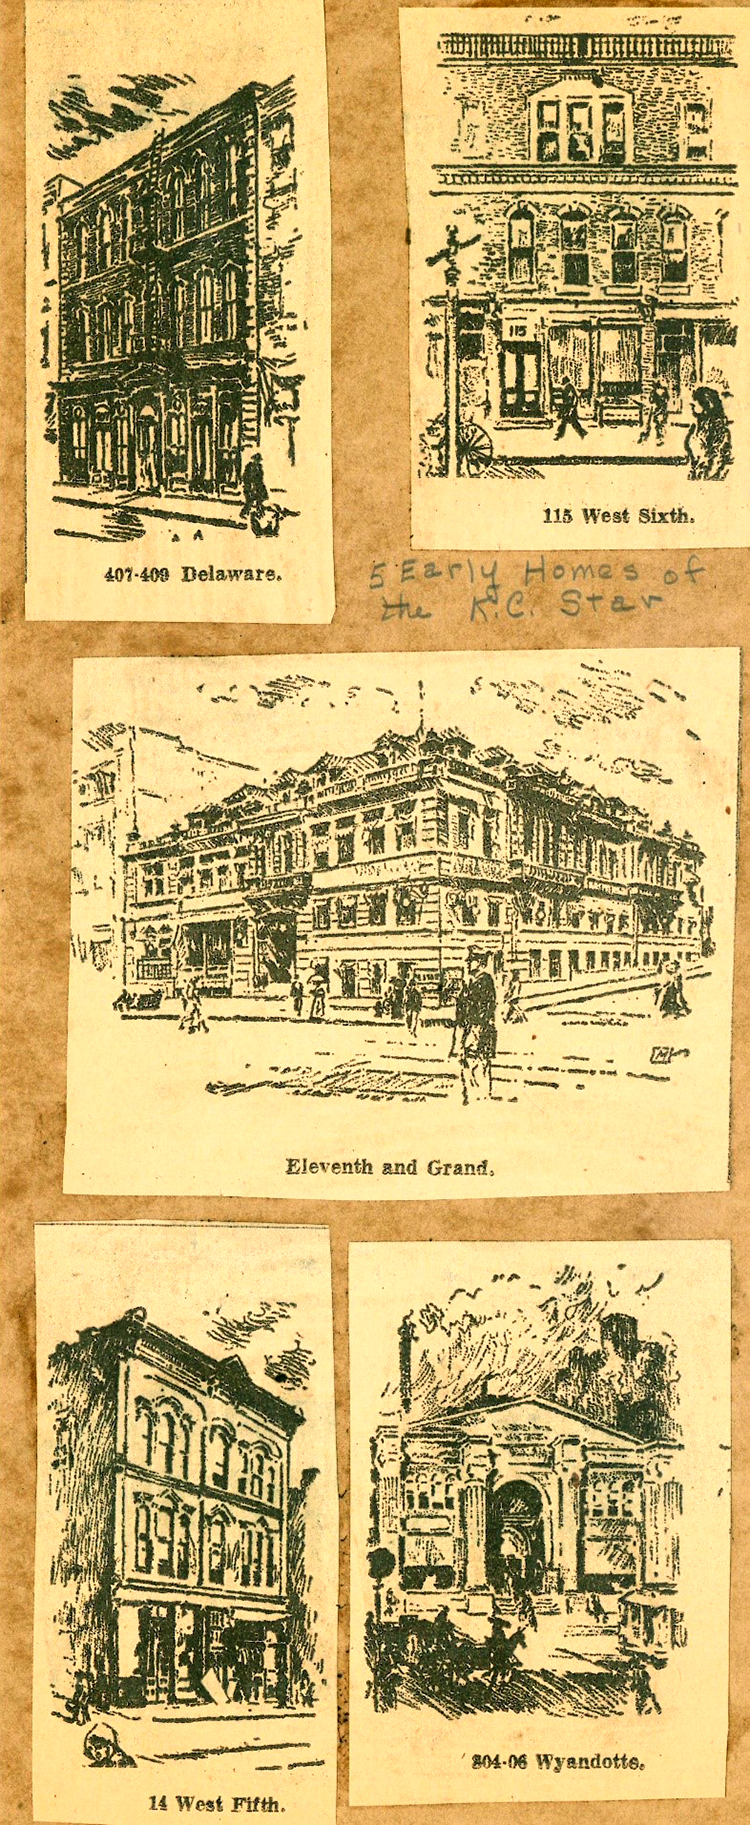 Newsprint photos of former Kansas City Star buildings.